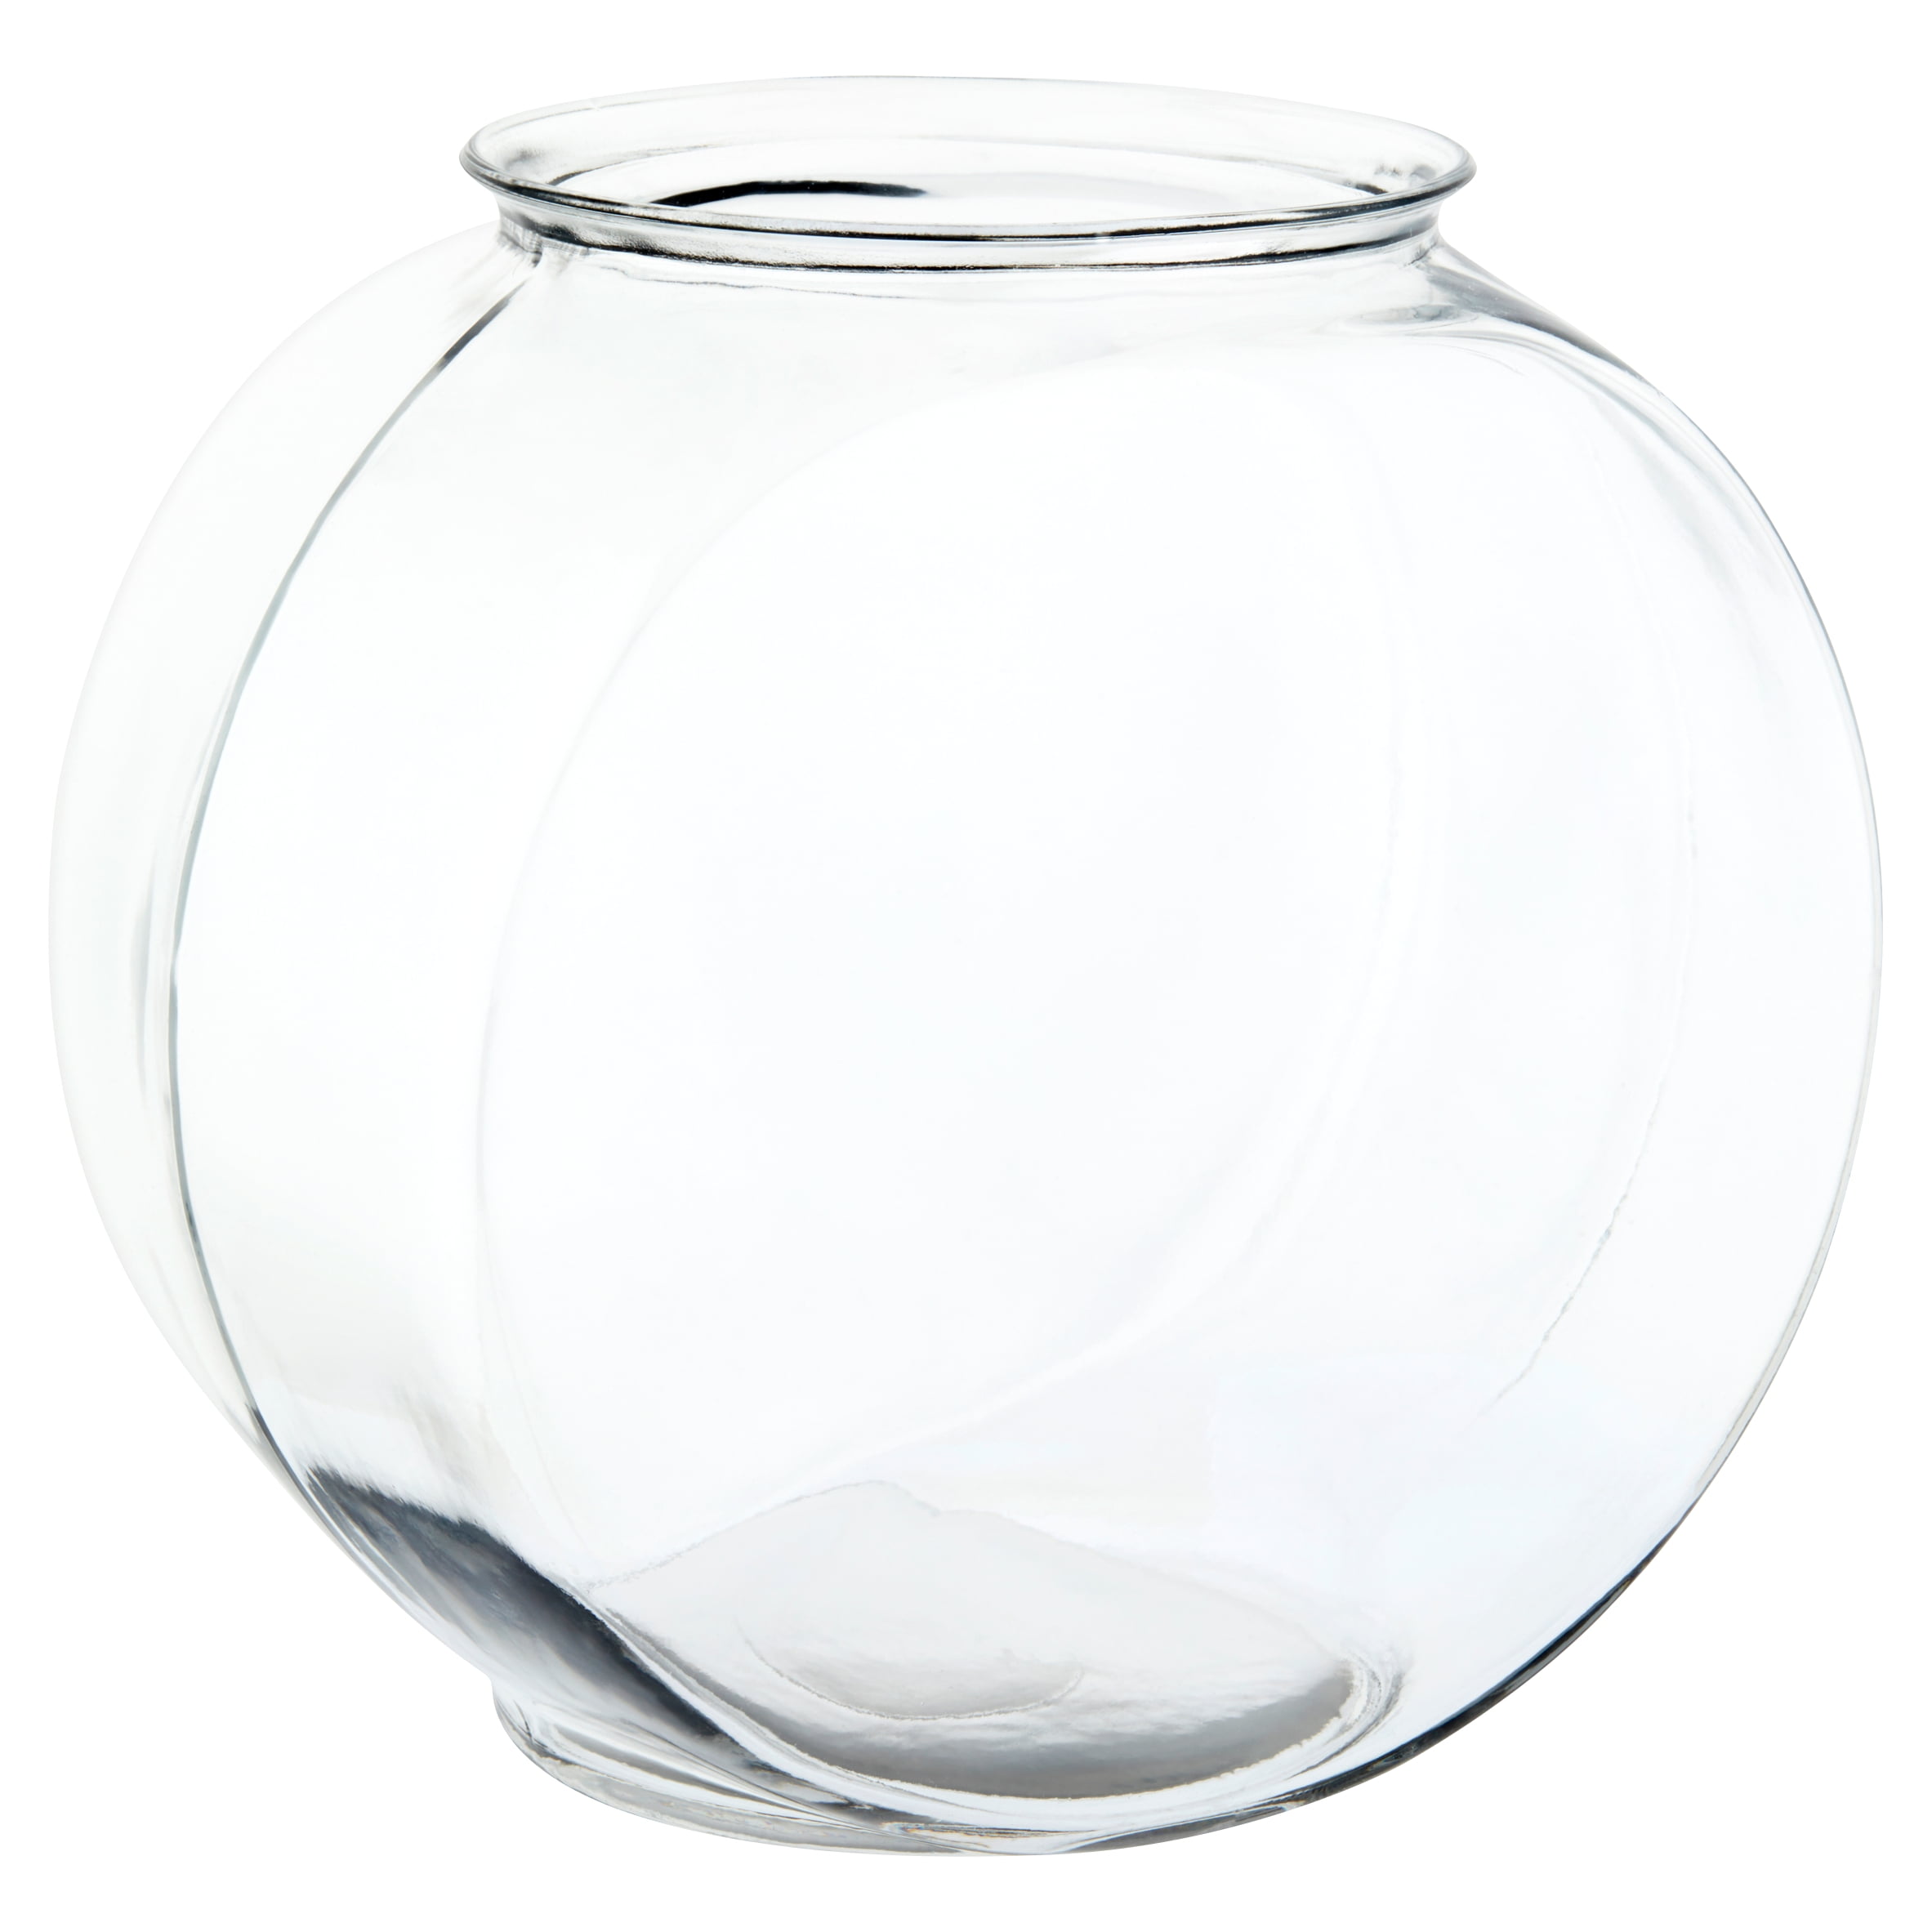 glass fish bowl vase